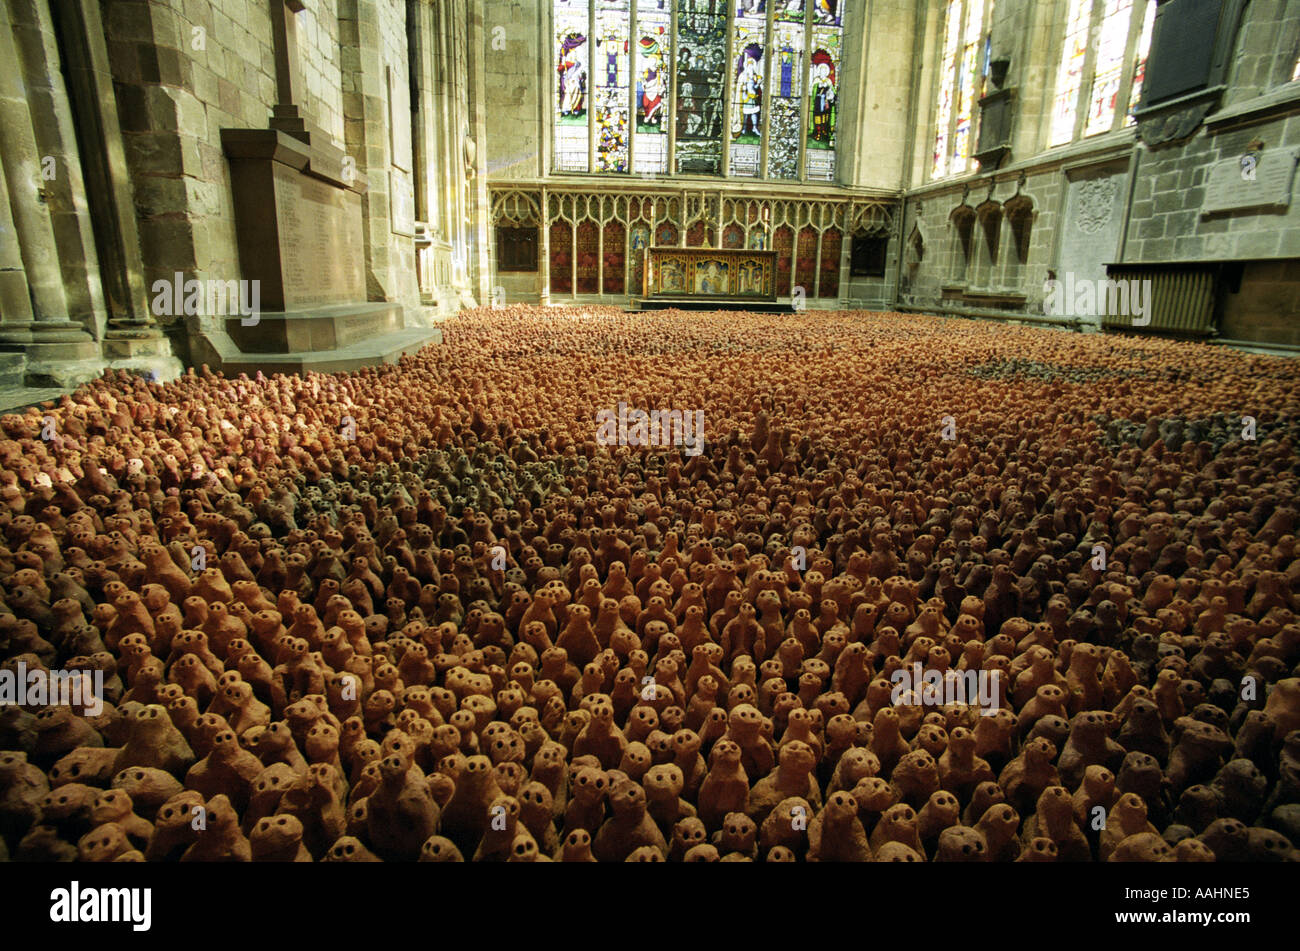 40000 terracotta figures inside St Mary s church in Shrewsbury Shropshire UK. Stock Photo